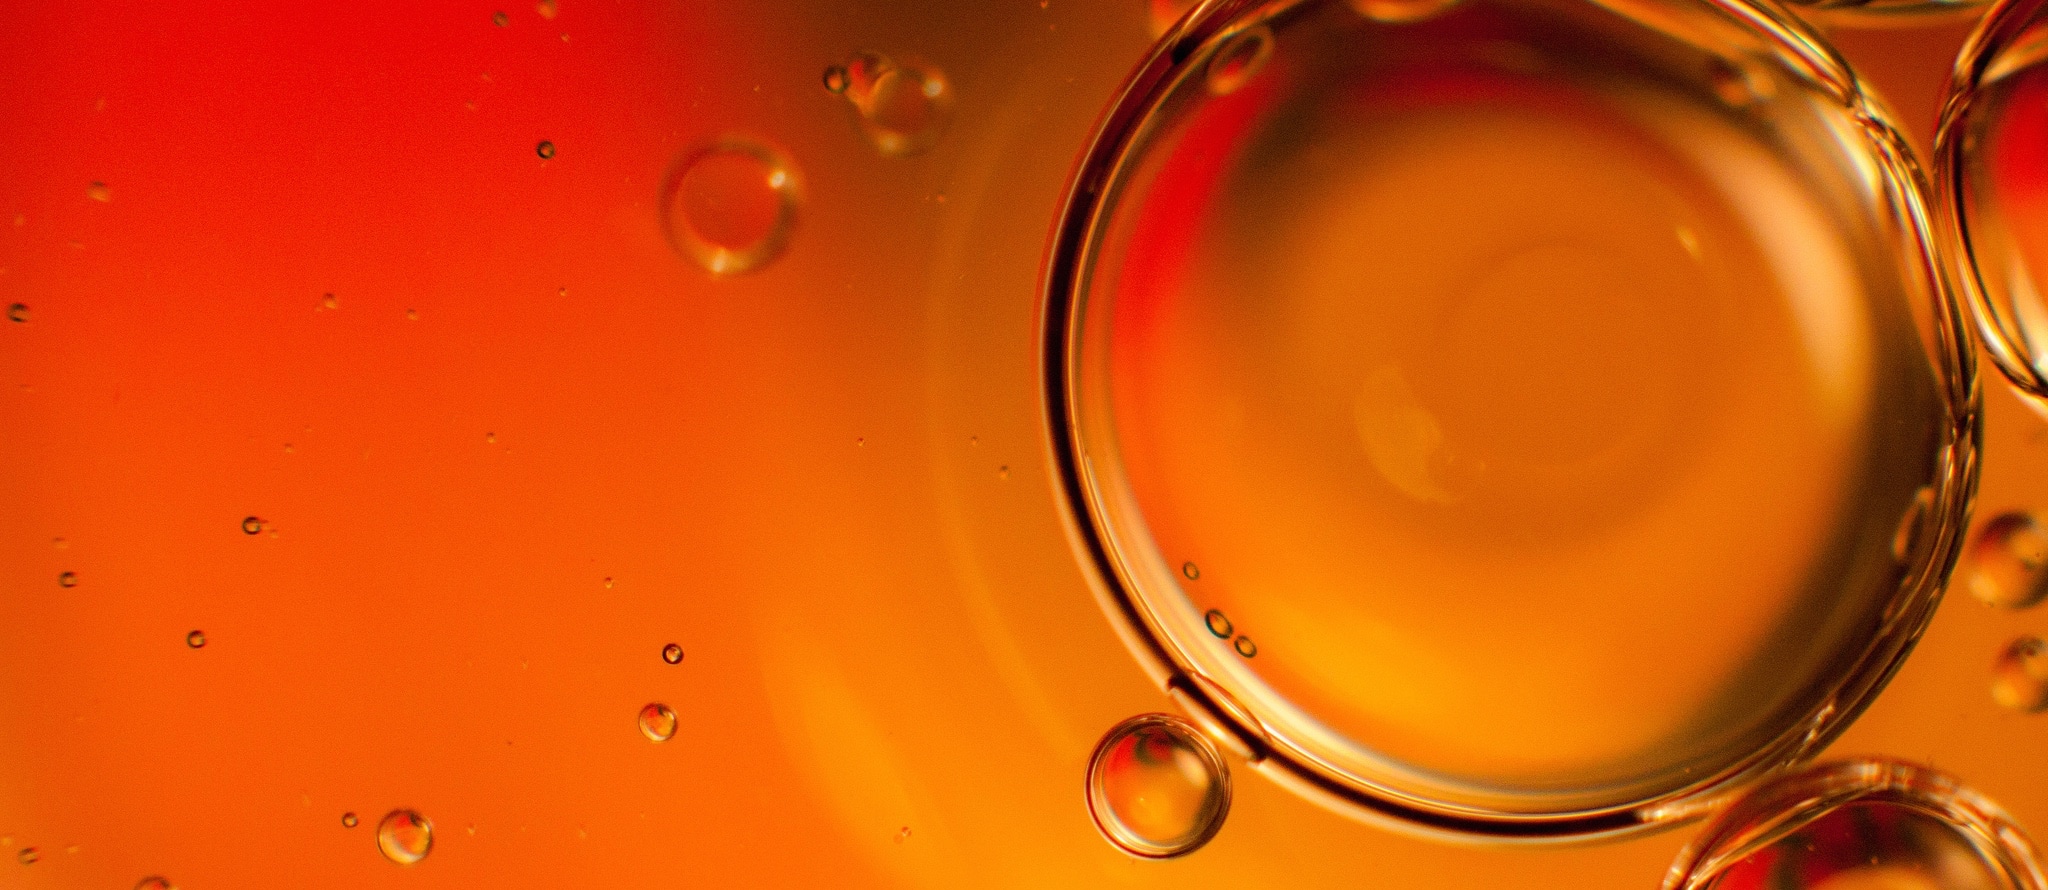 Does Orange Aromatherapy Reduce Anxiety?